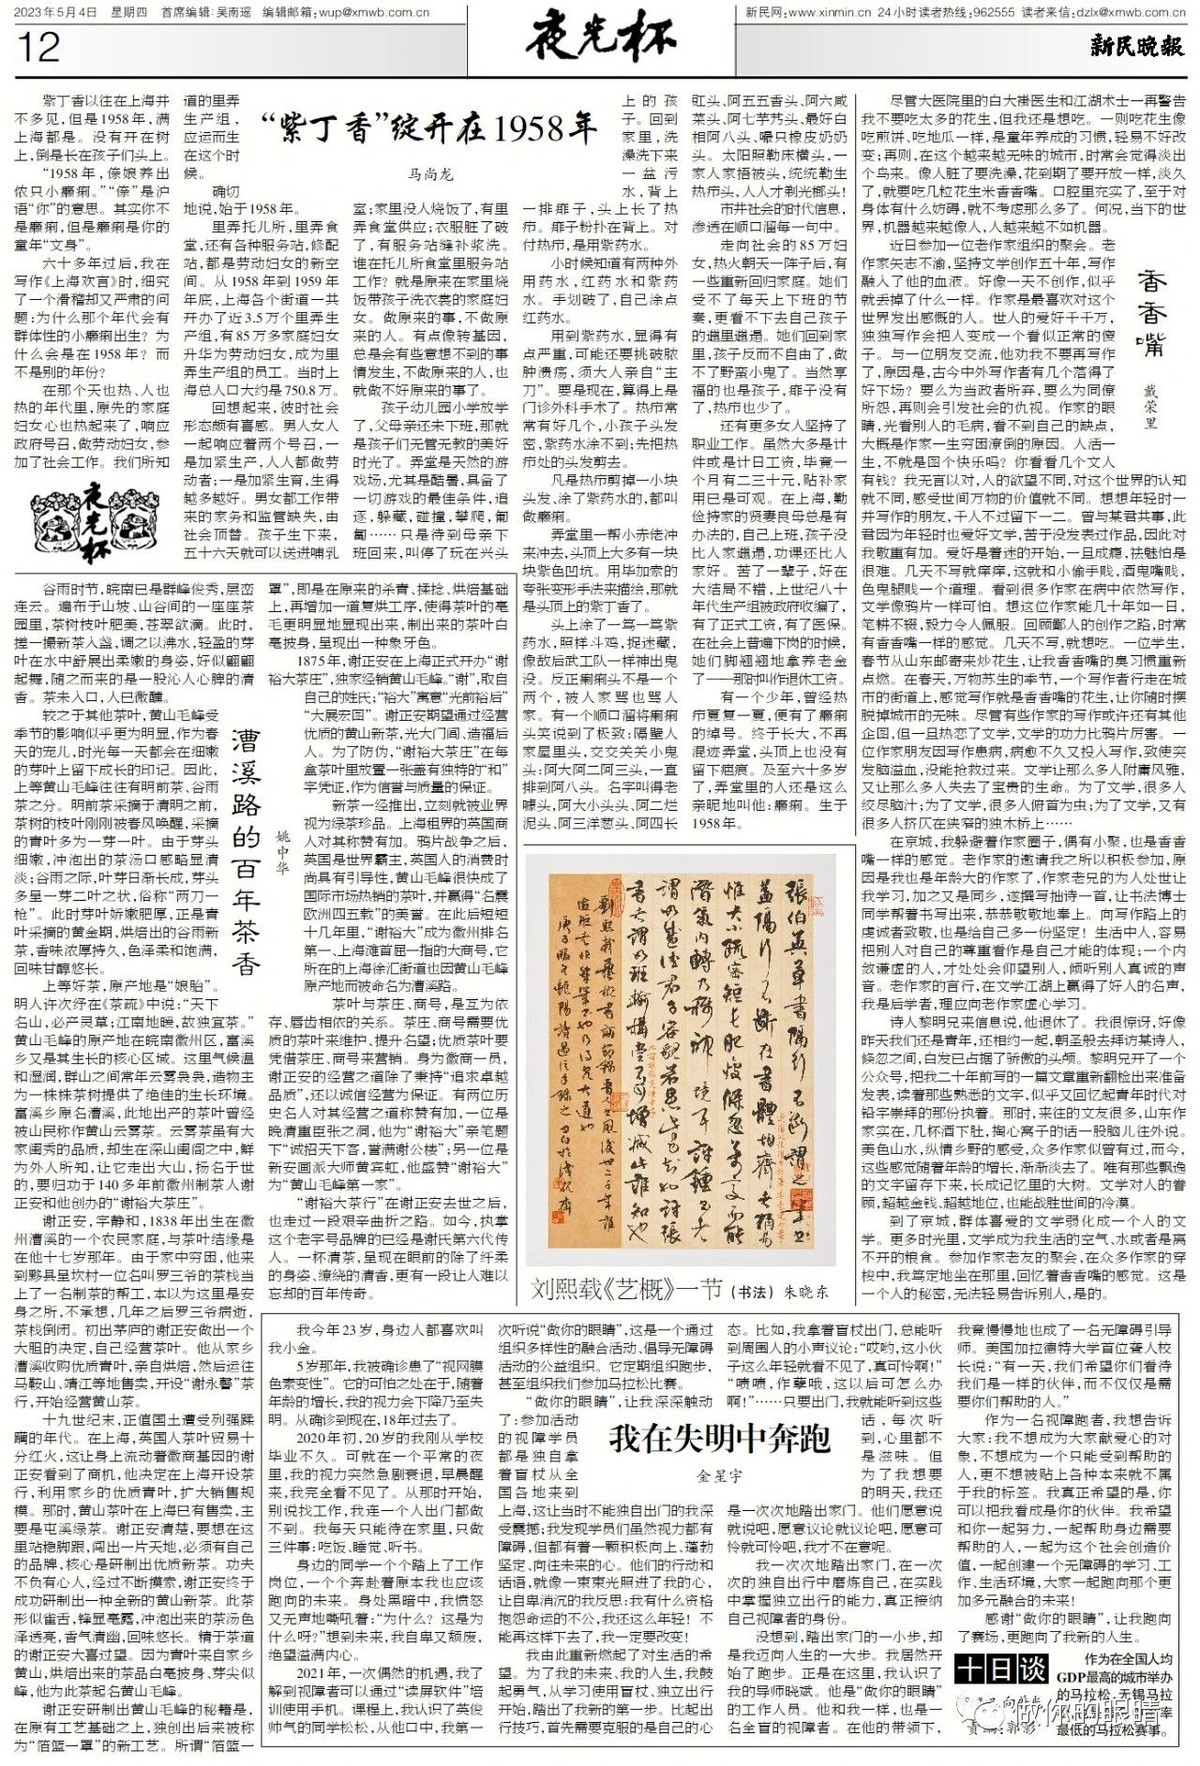 2023年5月4日《新民晚报》夜光杯版面 May 4th, 2023: Xinmin Evening News “Luminous Cup” report article cover